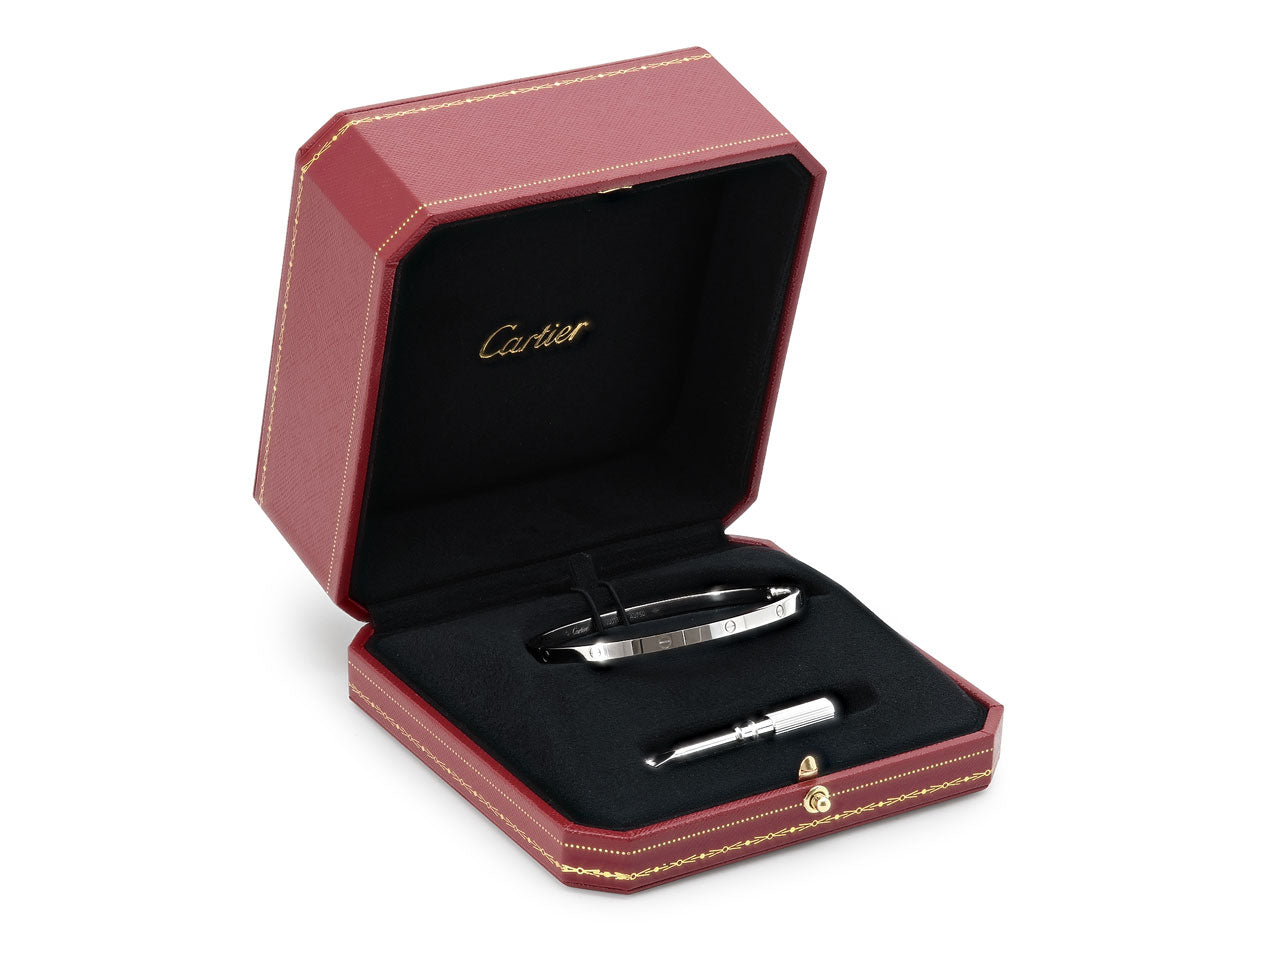 Cartier 'Love' Bracelet in 18K White Gold, Small Model, Size 19